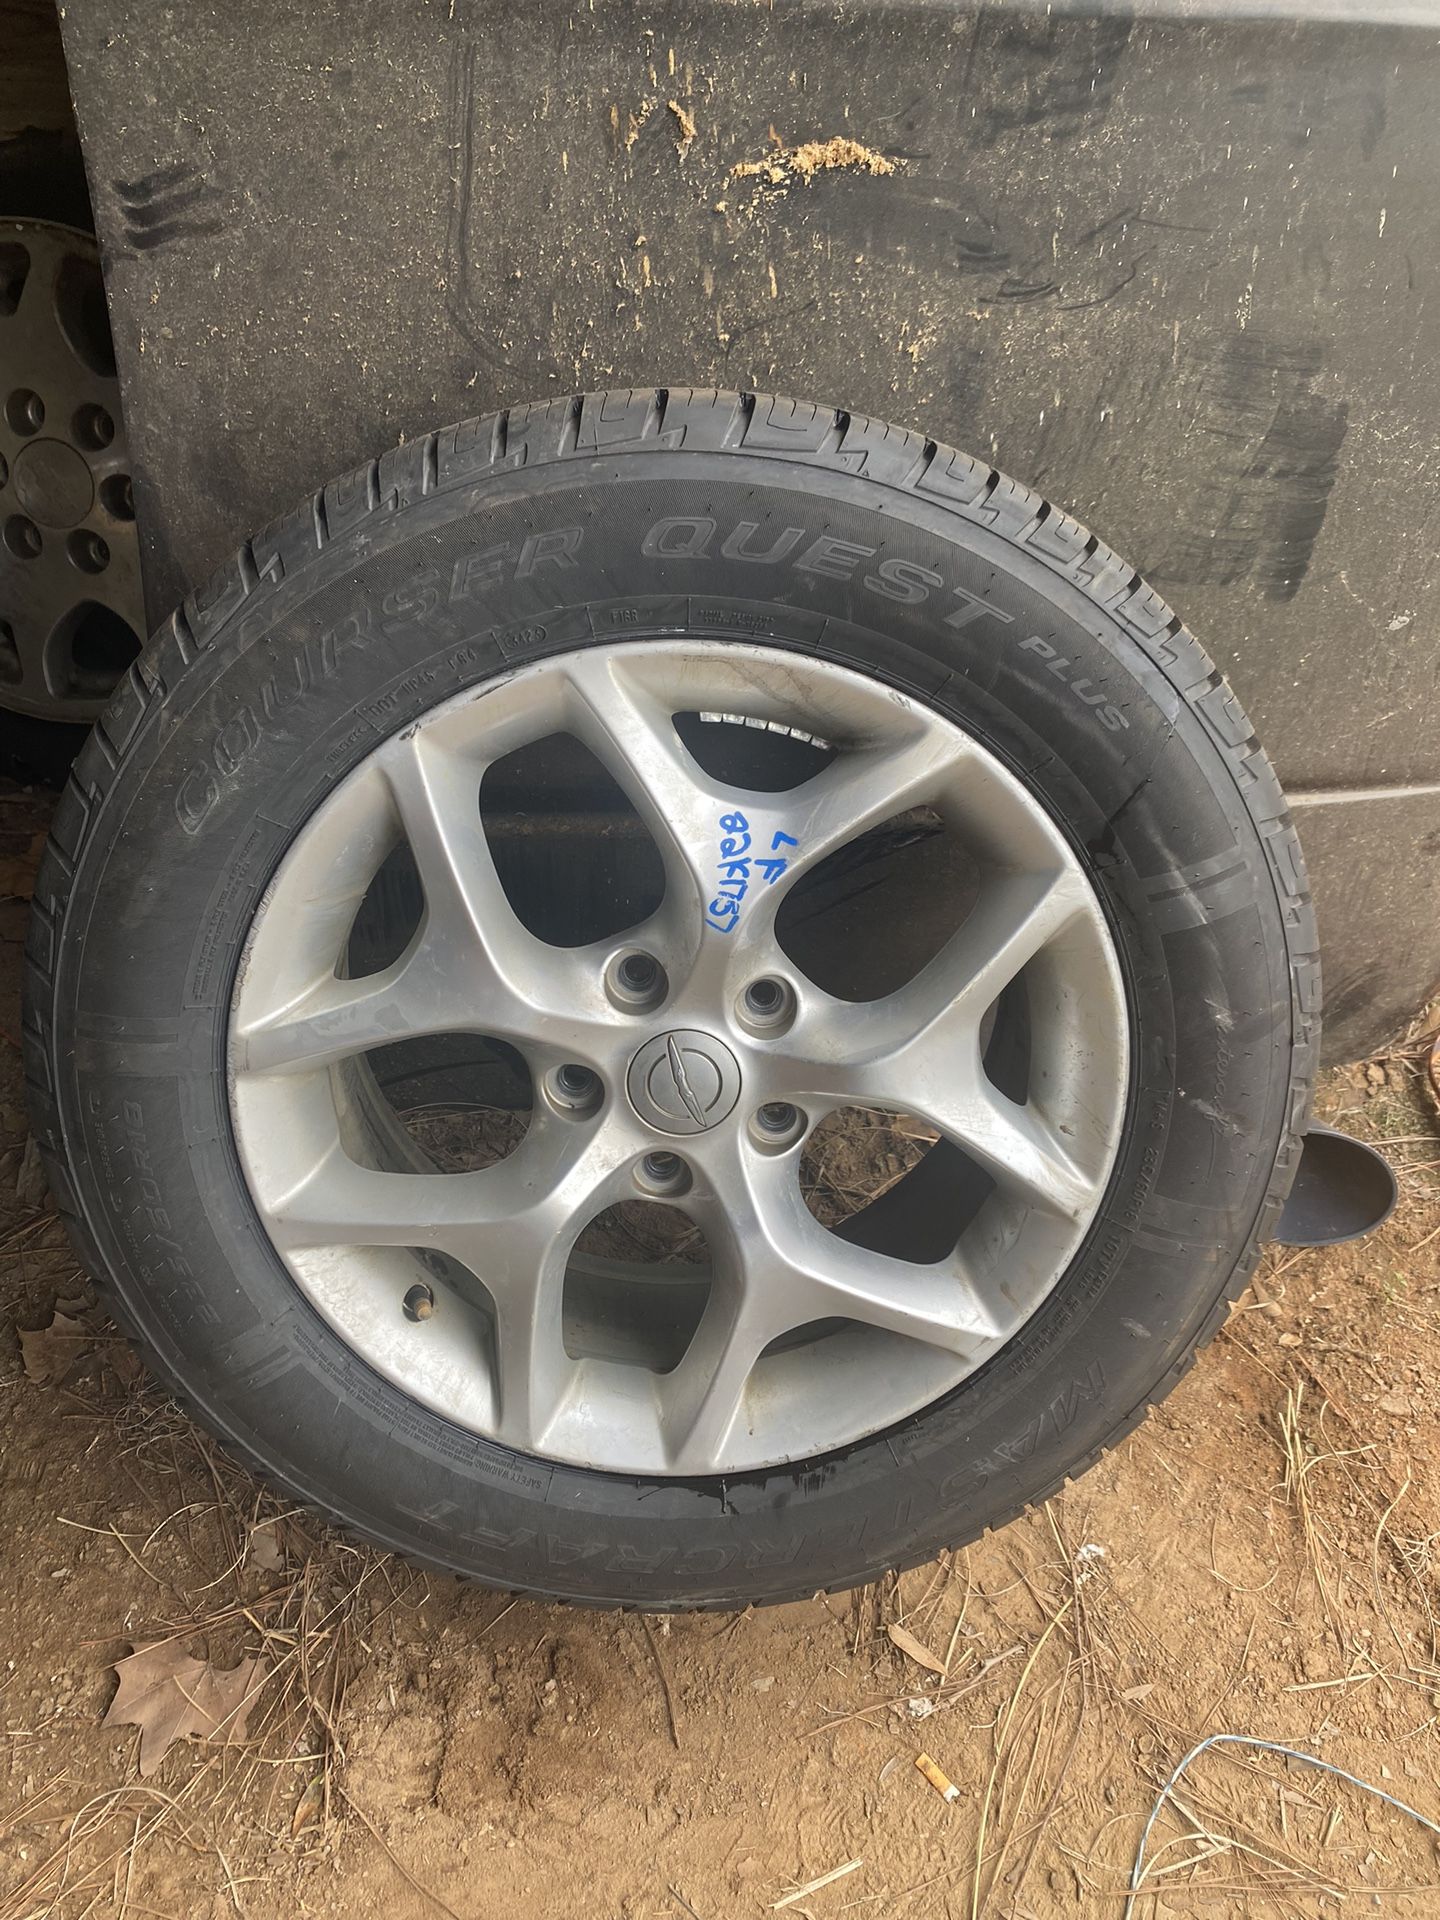  Chrysler 2017 Pacifica Brand New Tire & Rim